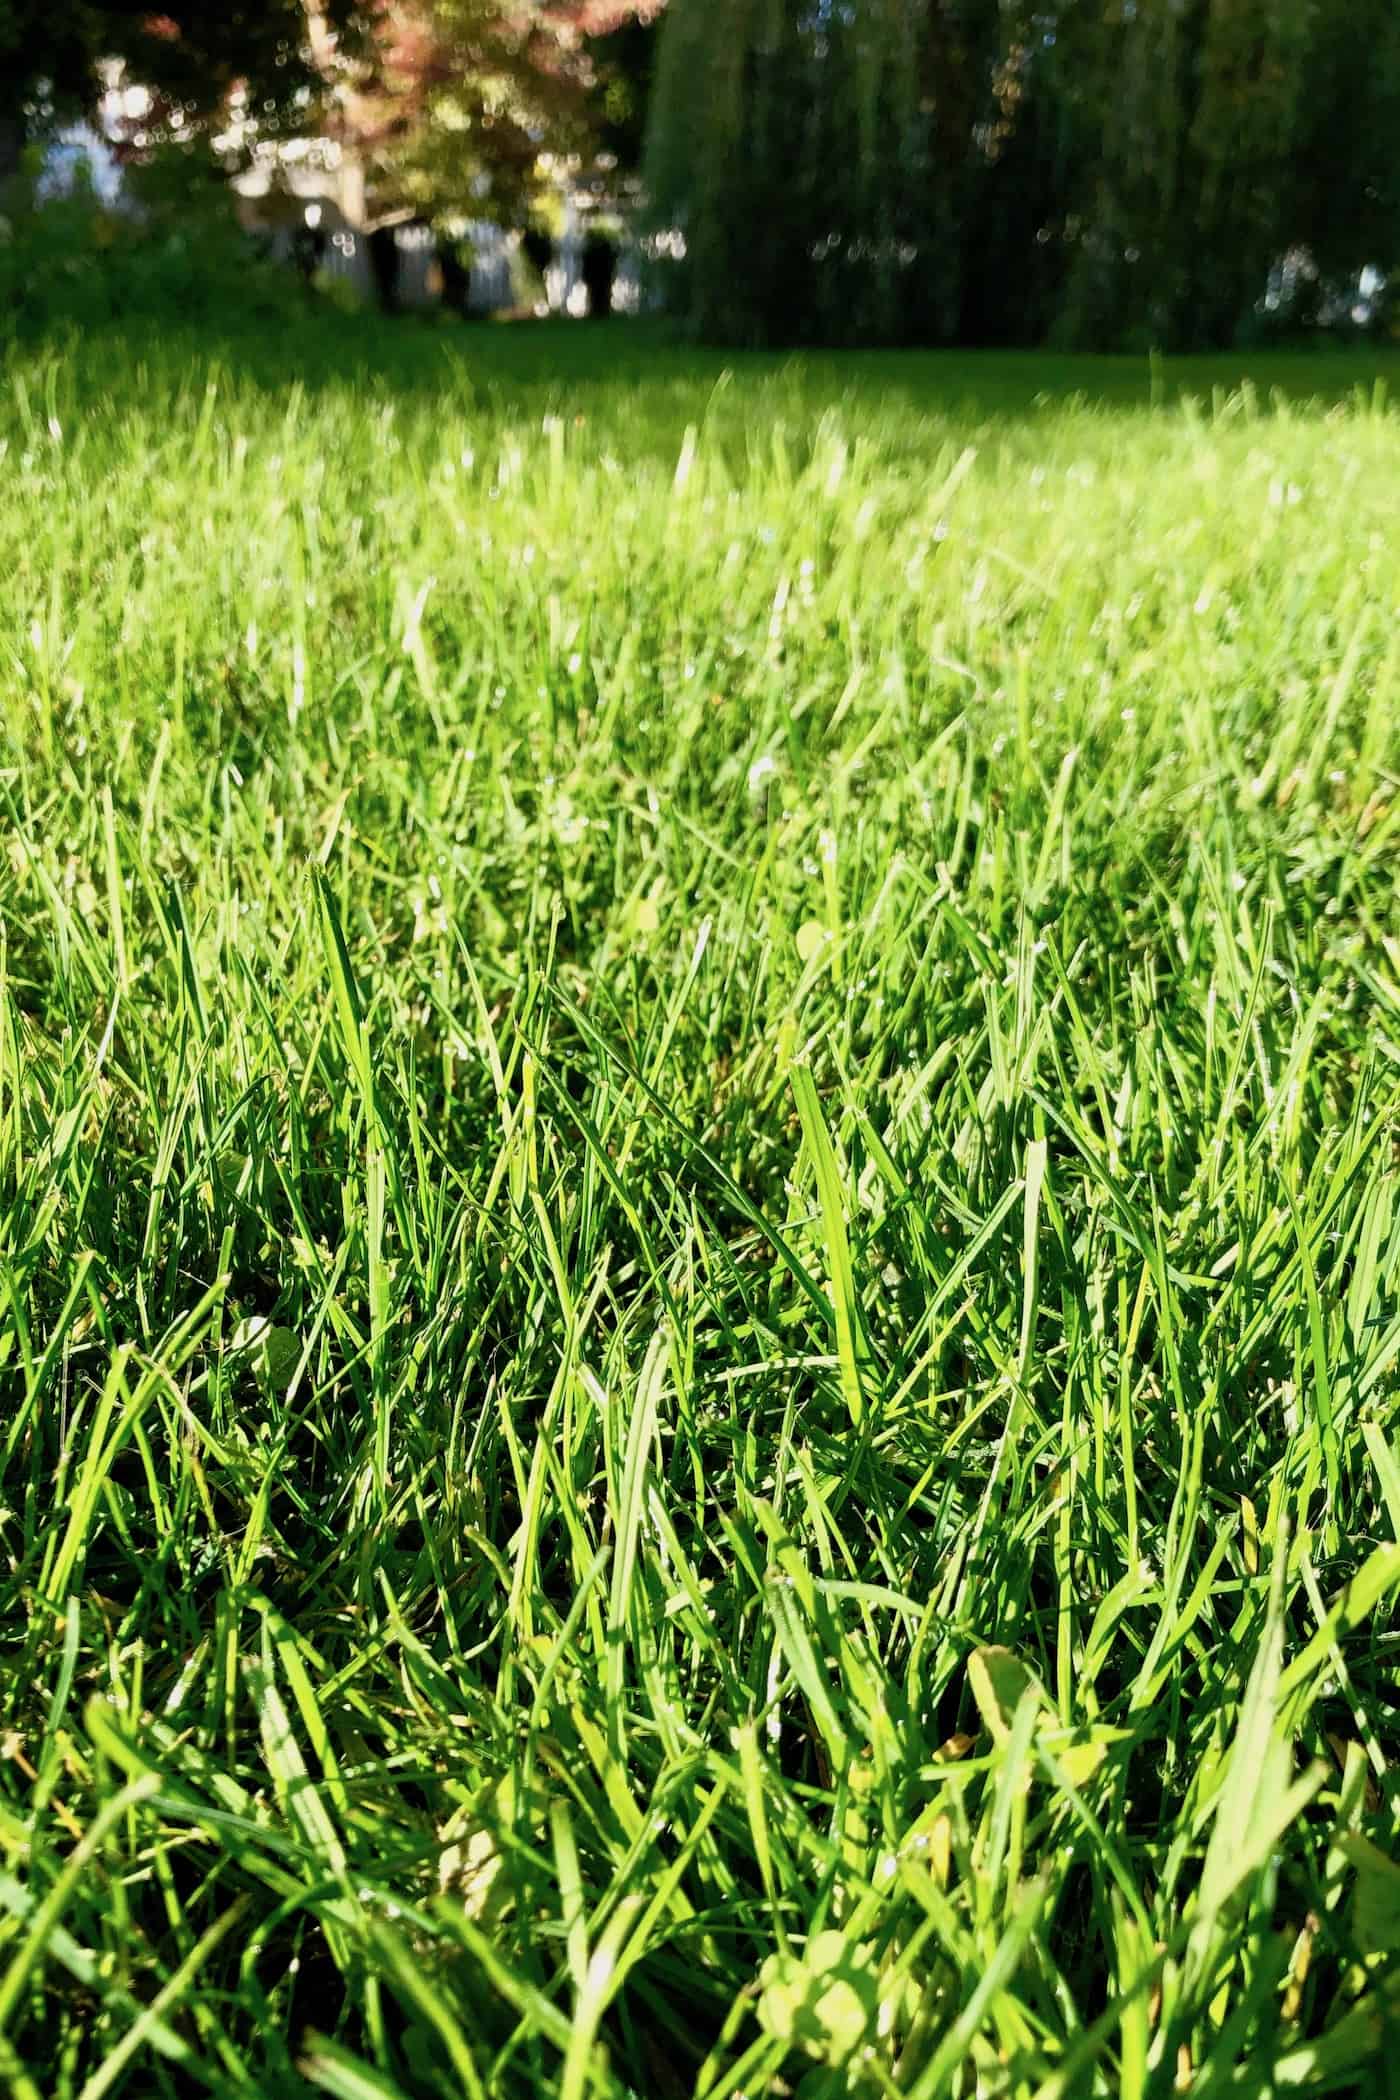 Healthy grass lawn in fall